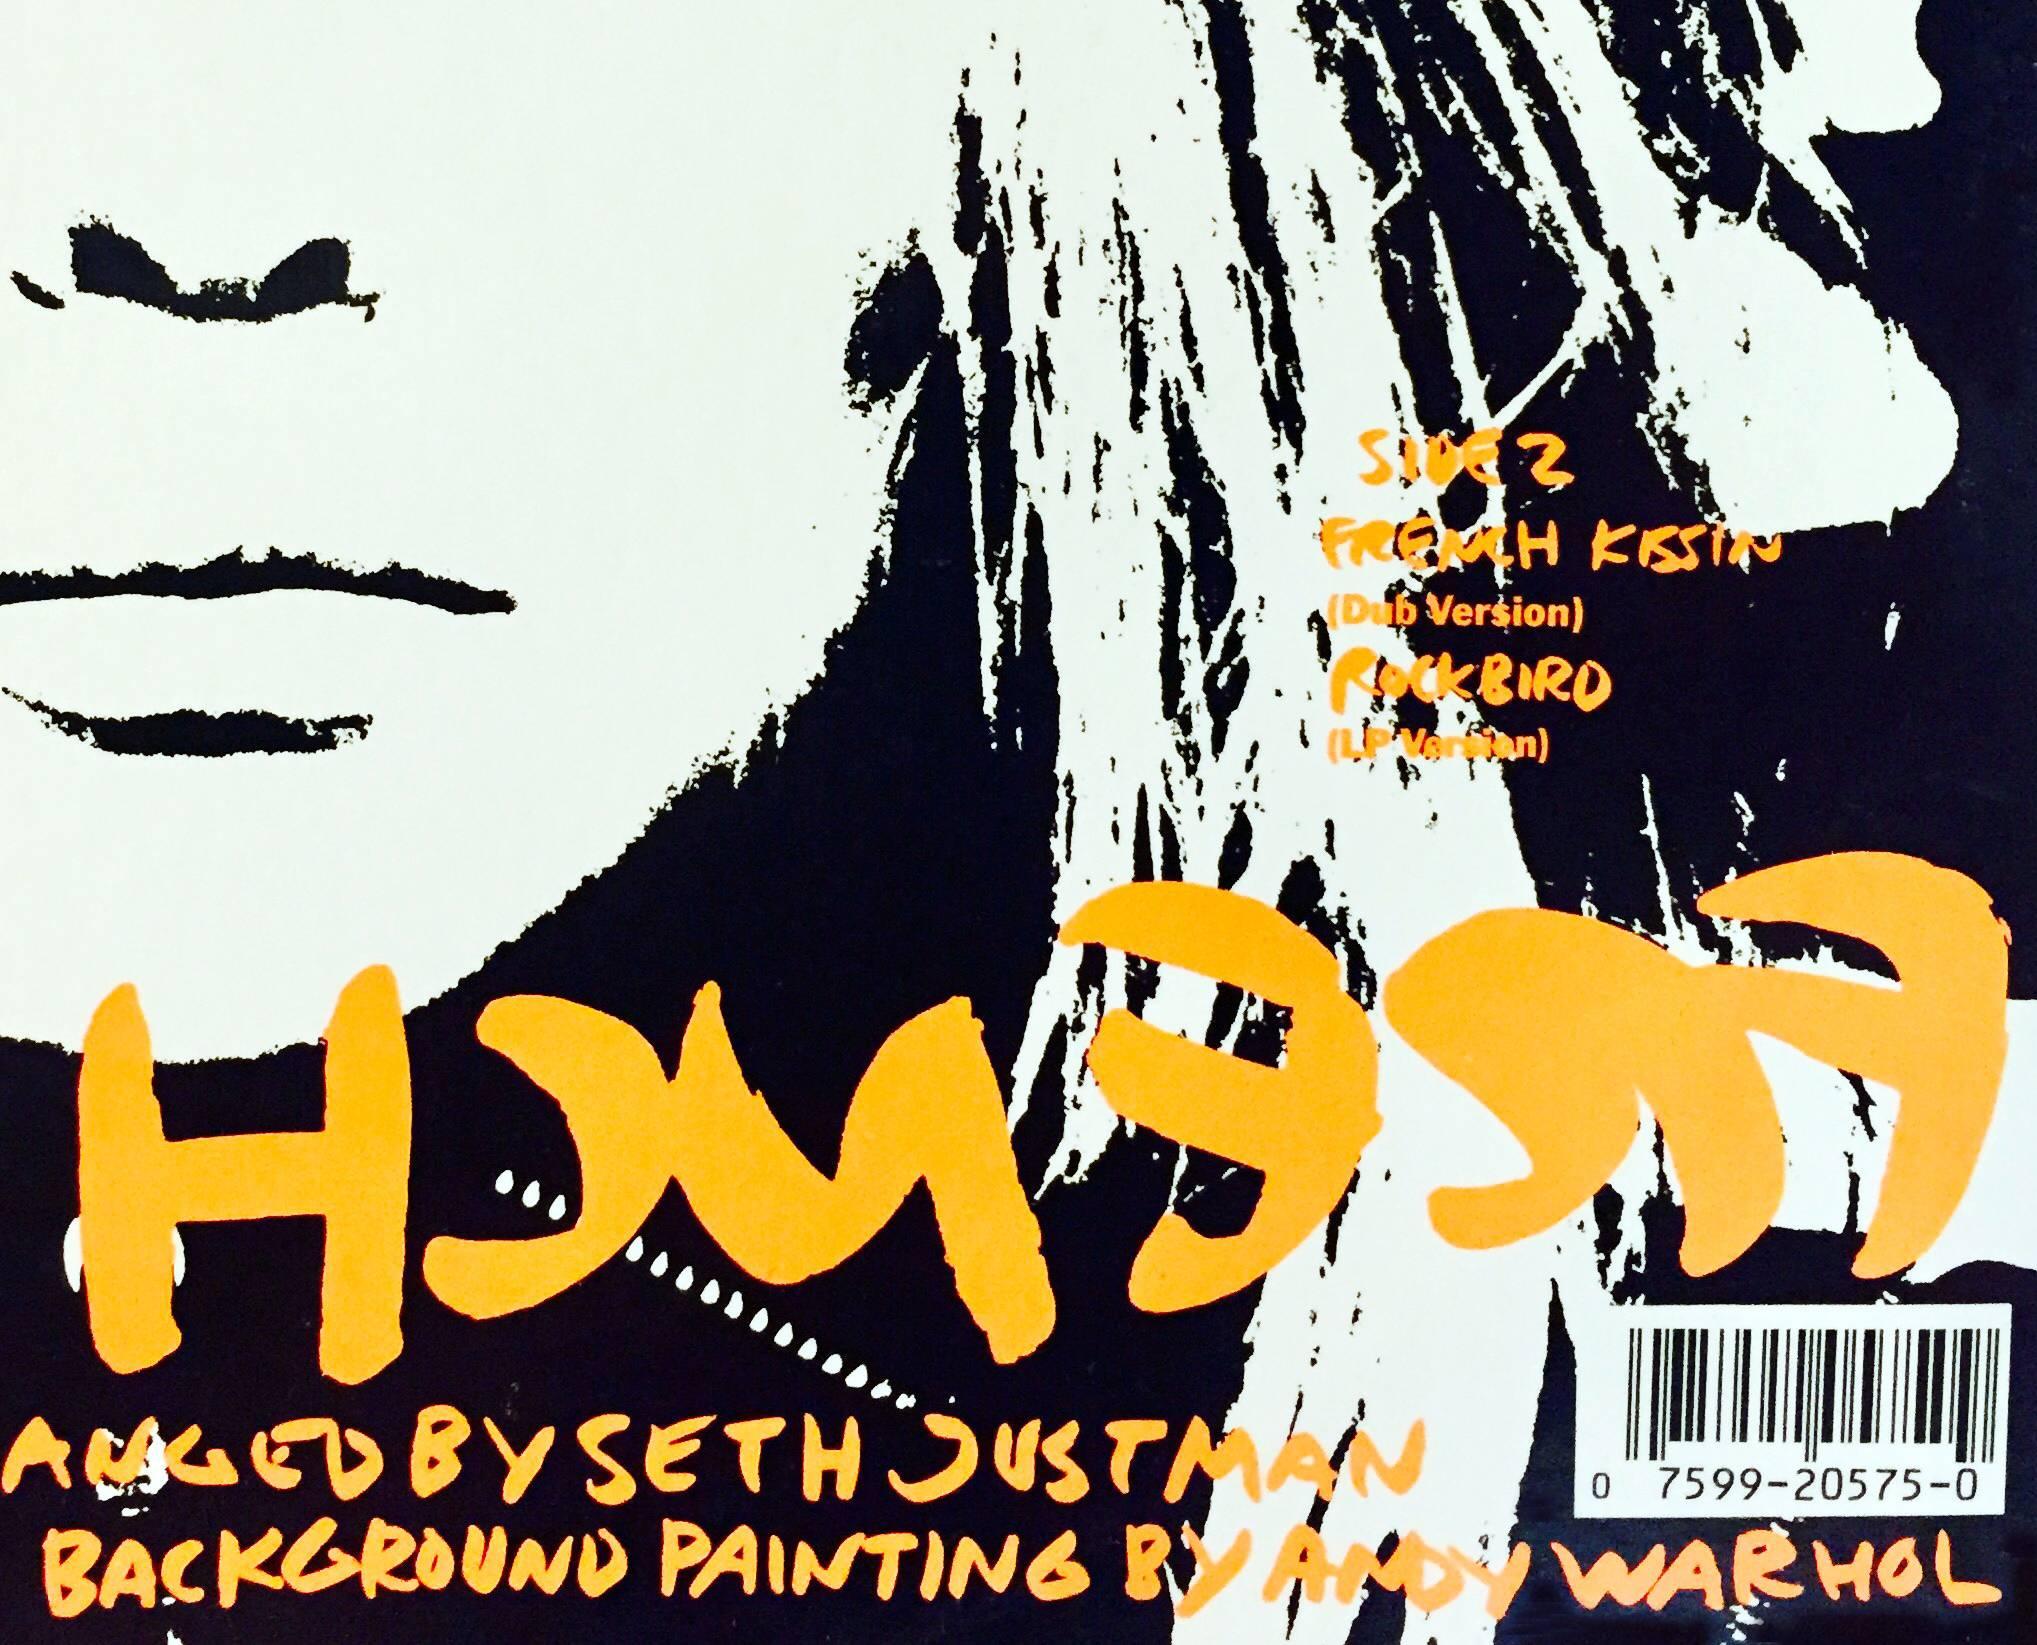 Andy Warhol Album Cover Art, 1986
Debbie Harry, 